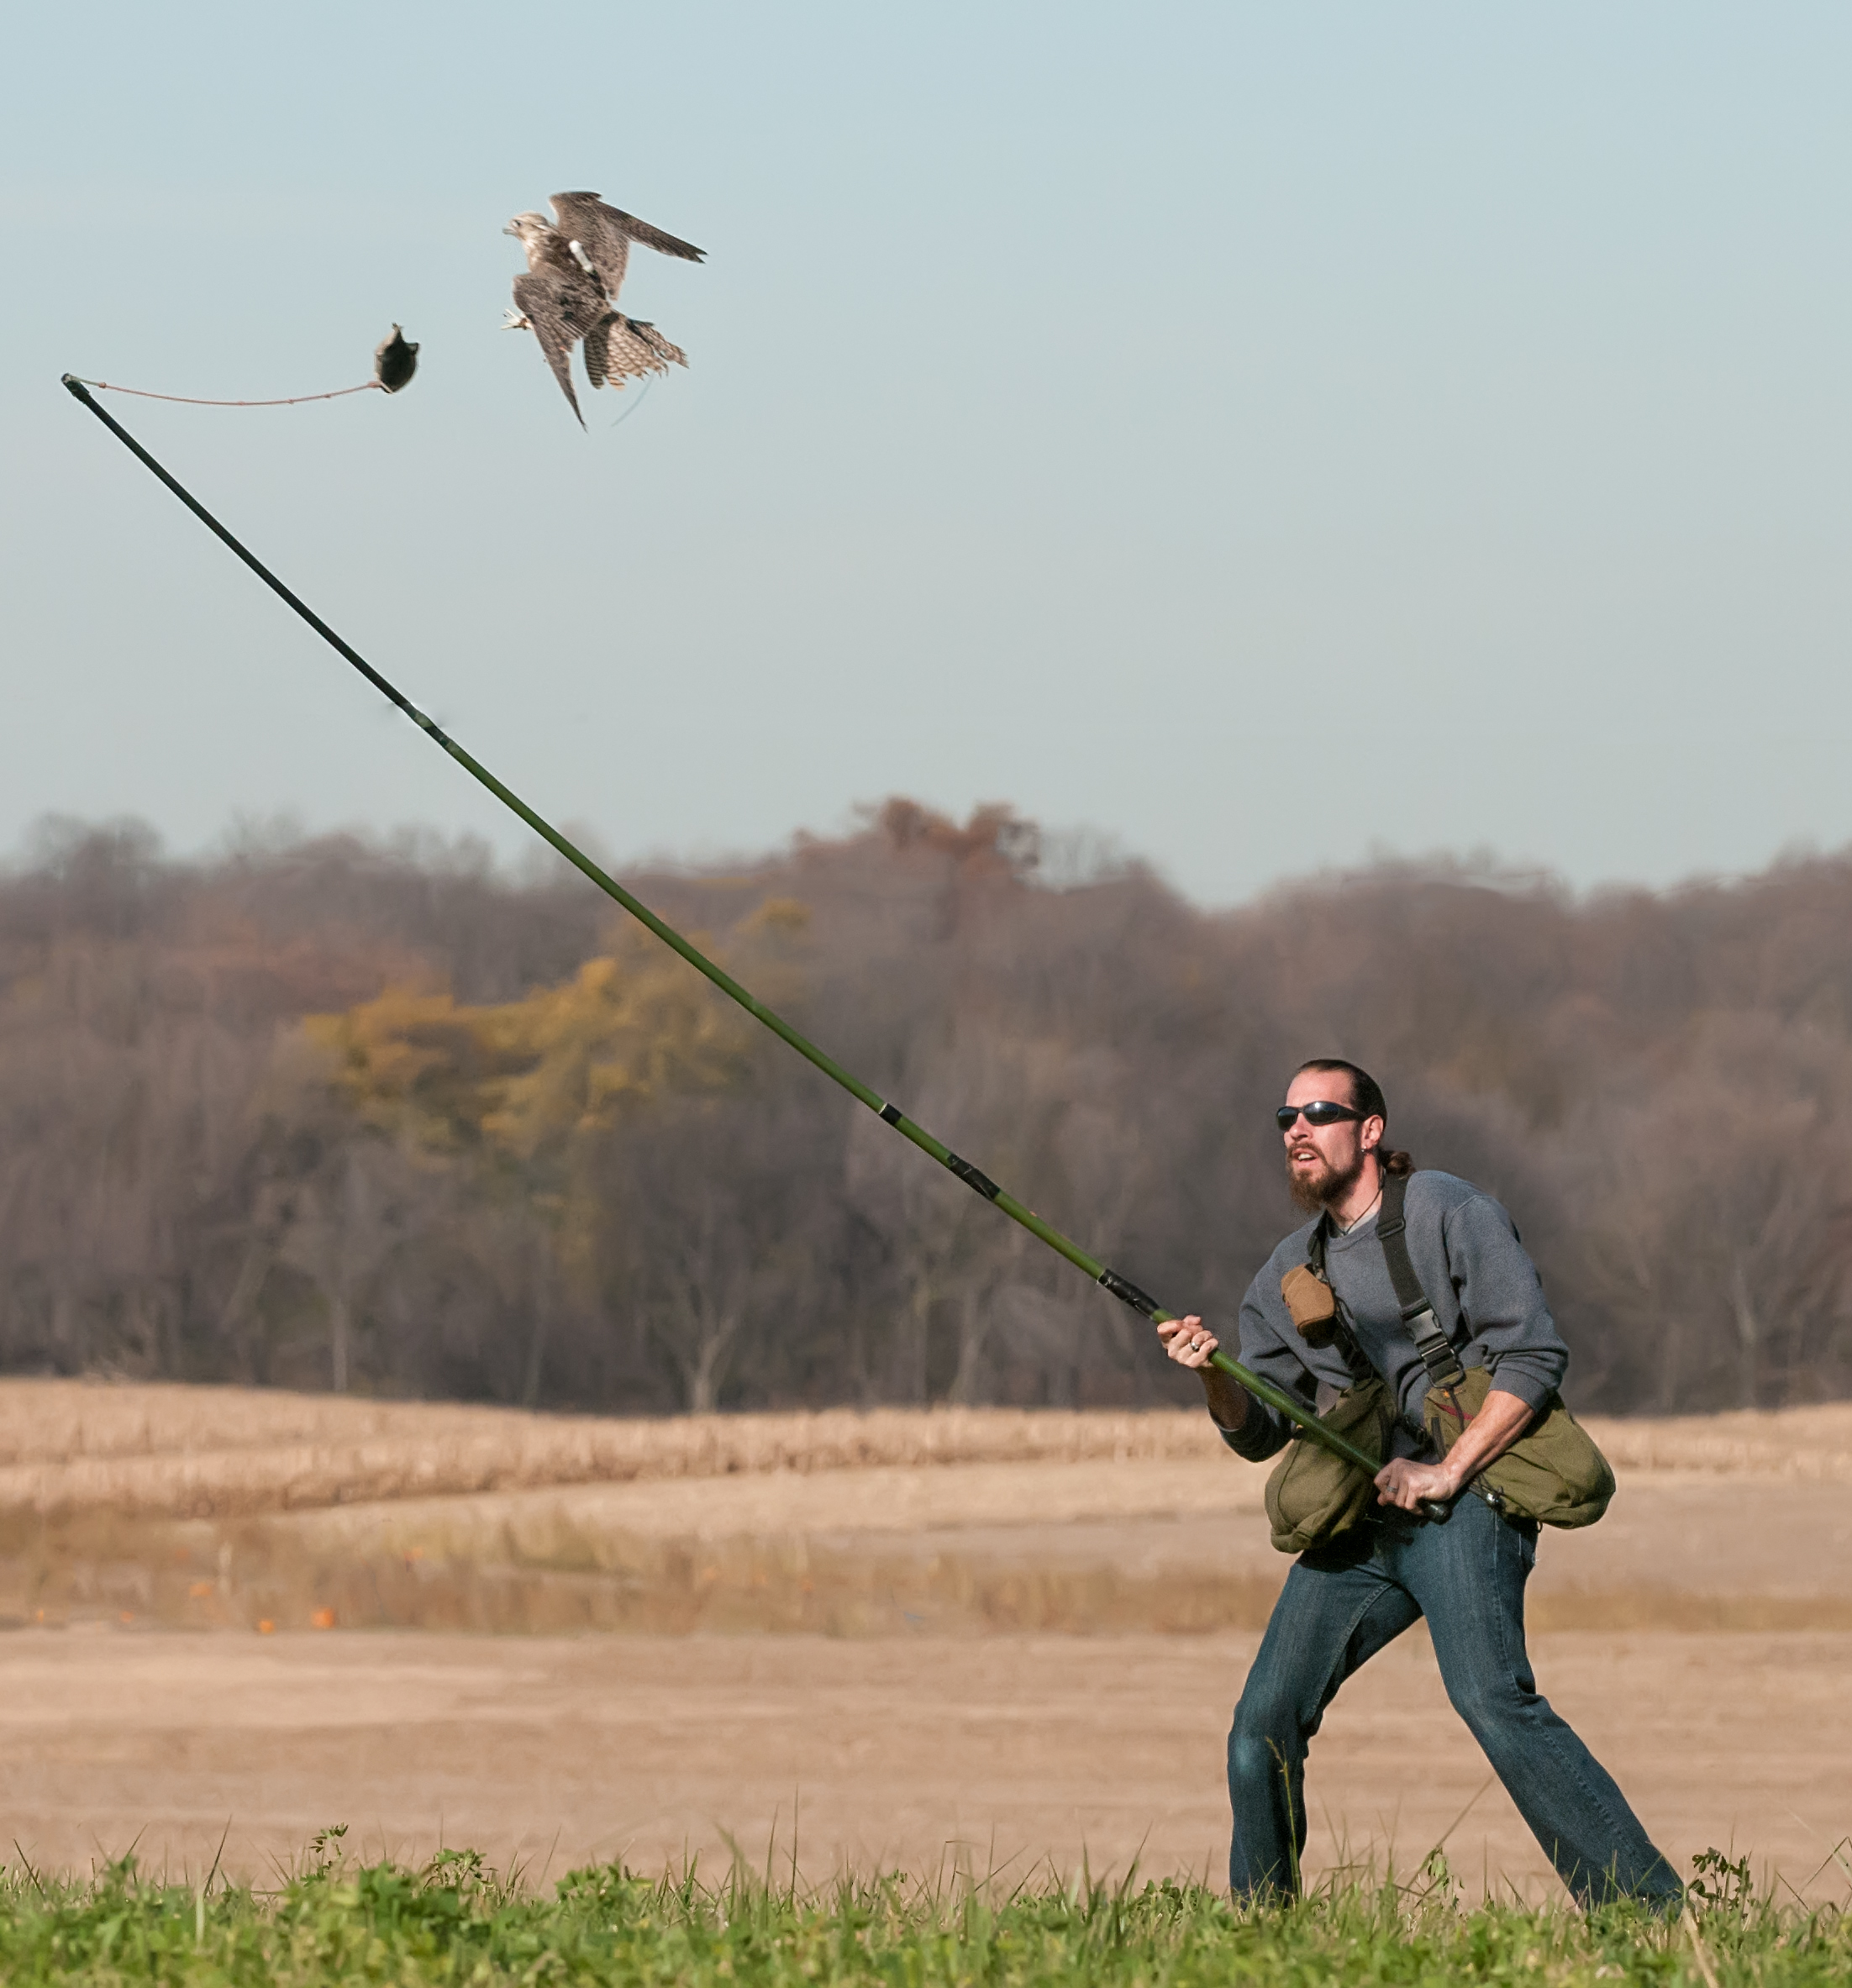 Falconer lure training a falcon